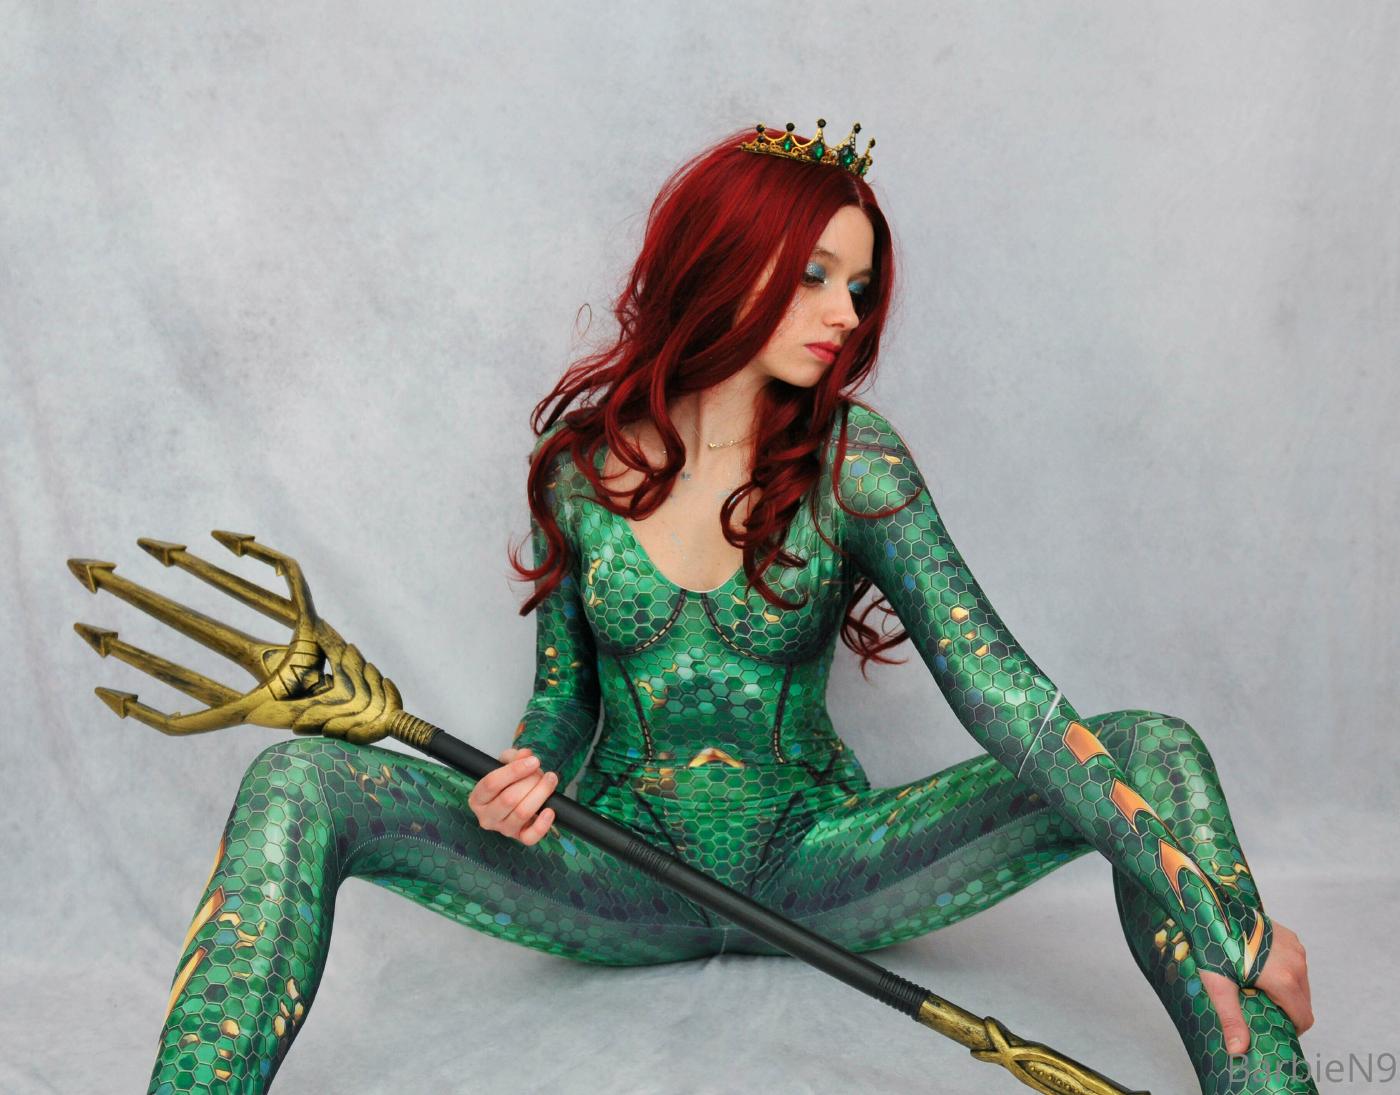 Barbien9 Aquaman Queen Mera Cosplay Onlyfans Set Leaked 0008